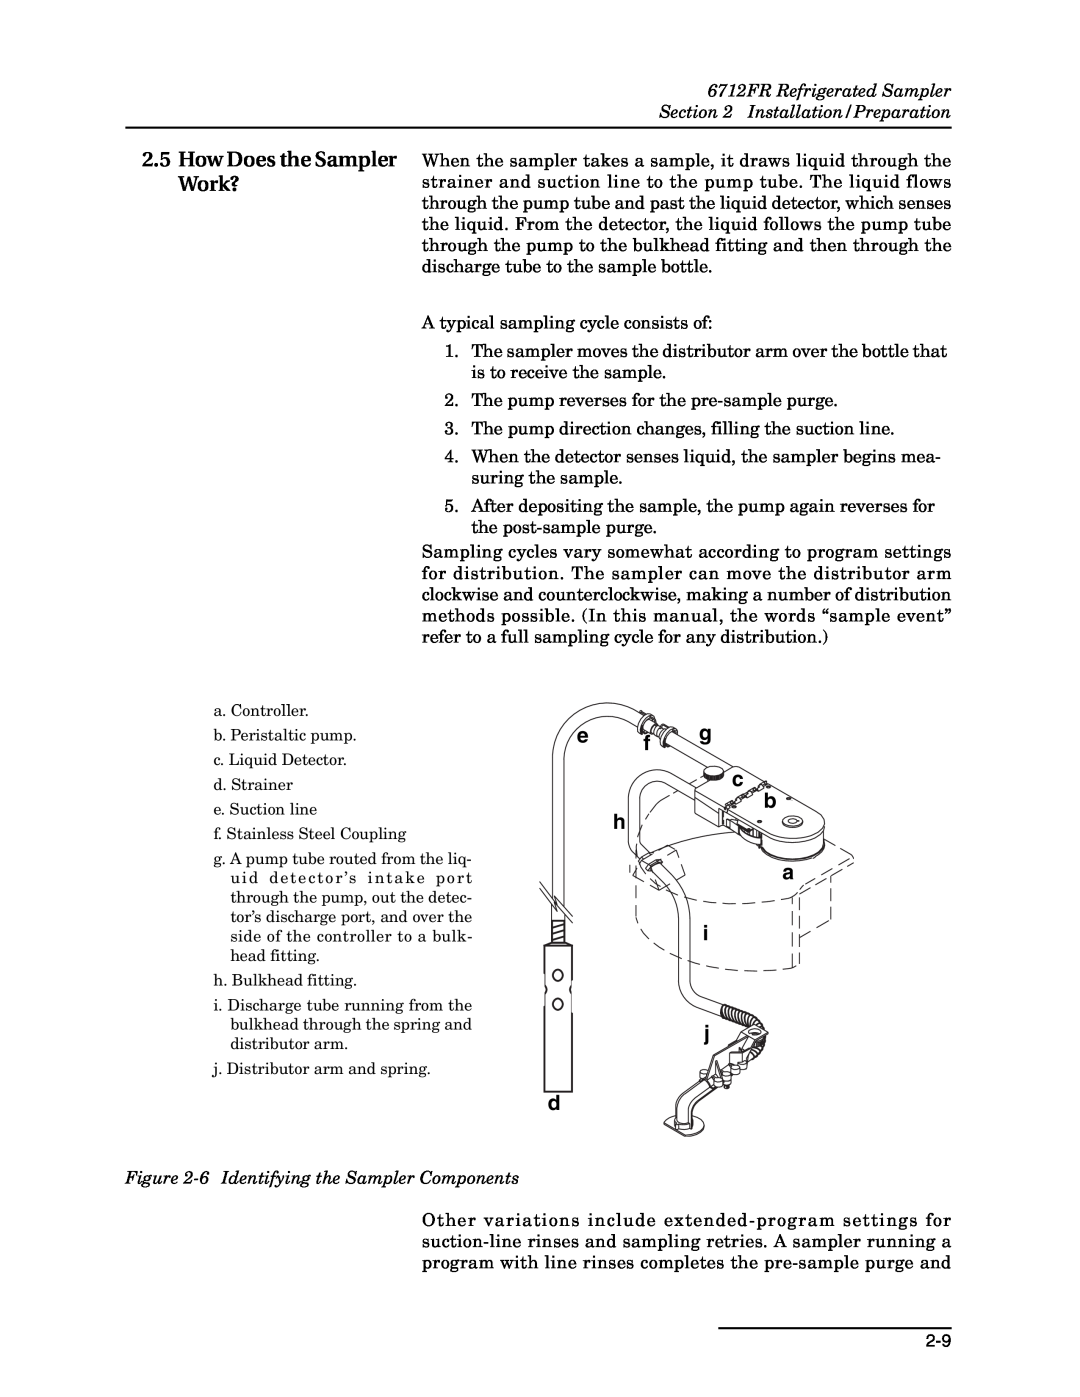 Teledyne manual How Does the Sampler Work?, e f g c b h a i j d, 6712FR Refrigerated Sampler Installation/Preparation 